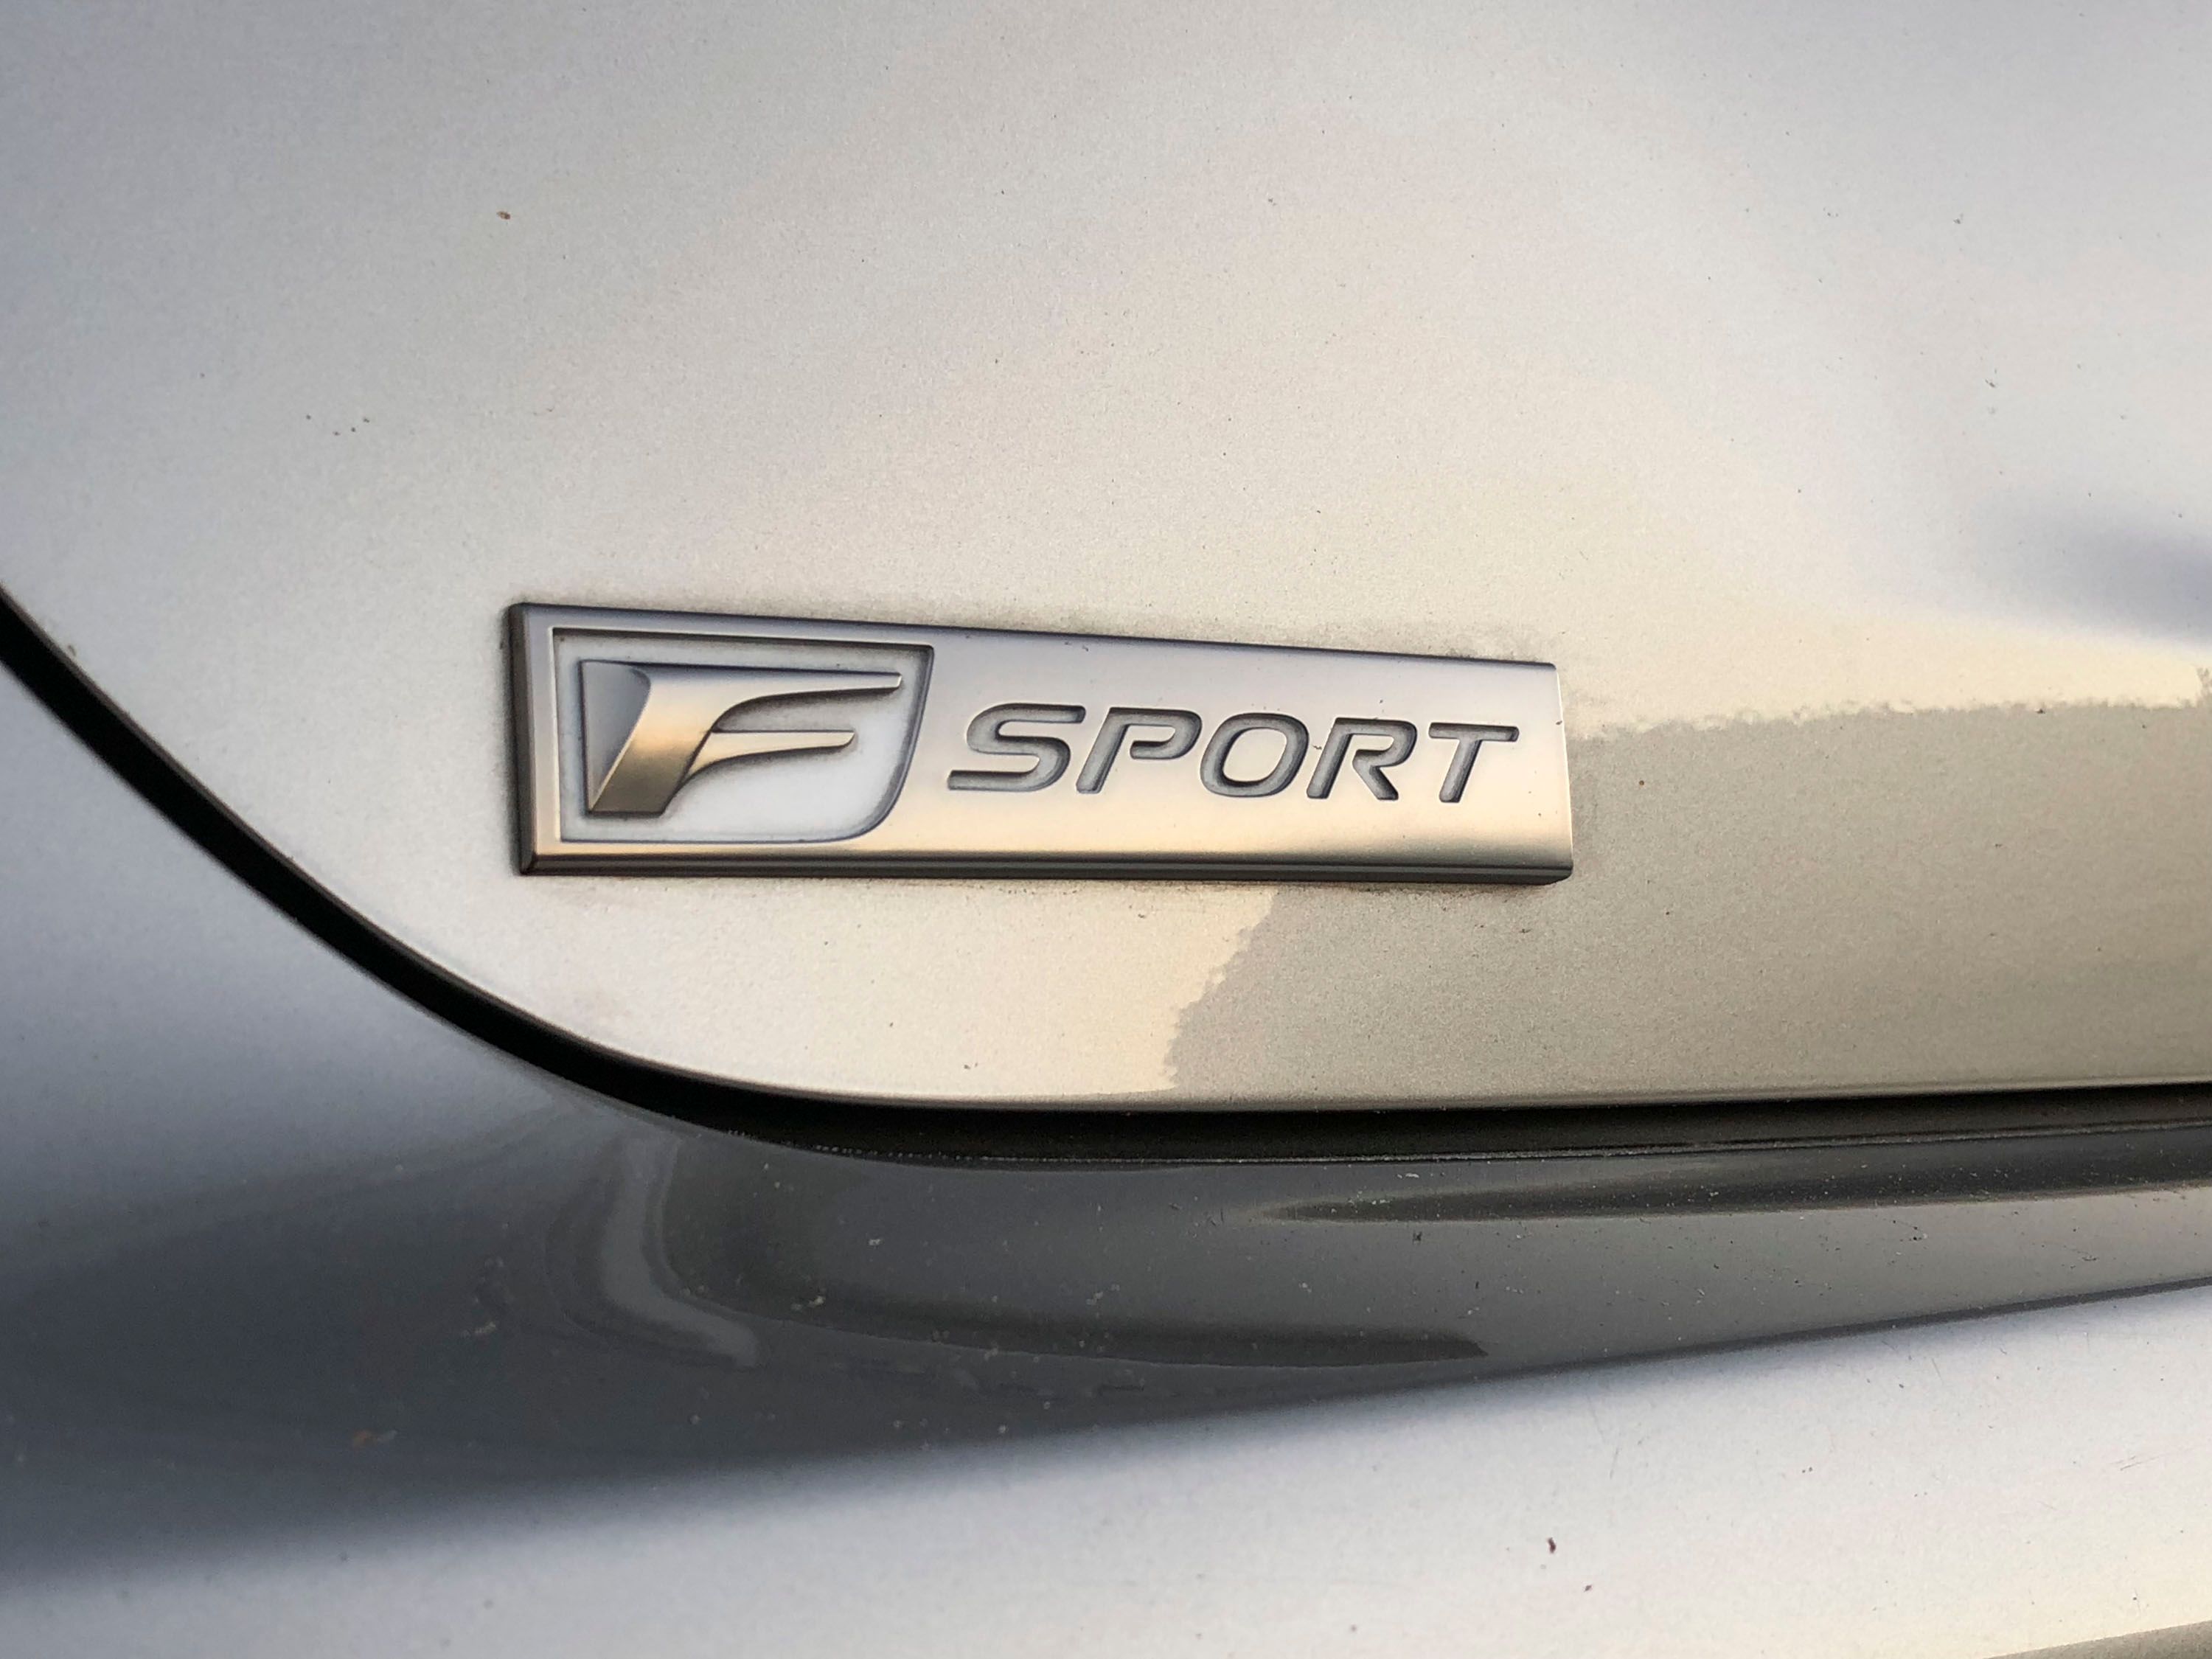 2017 Lexus GS 200t F Sport - Driven